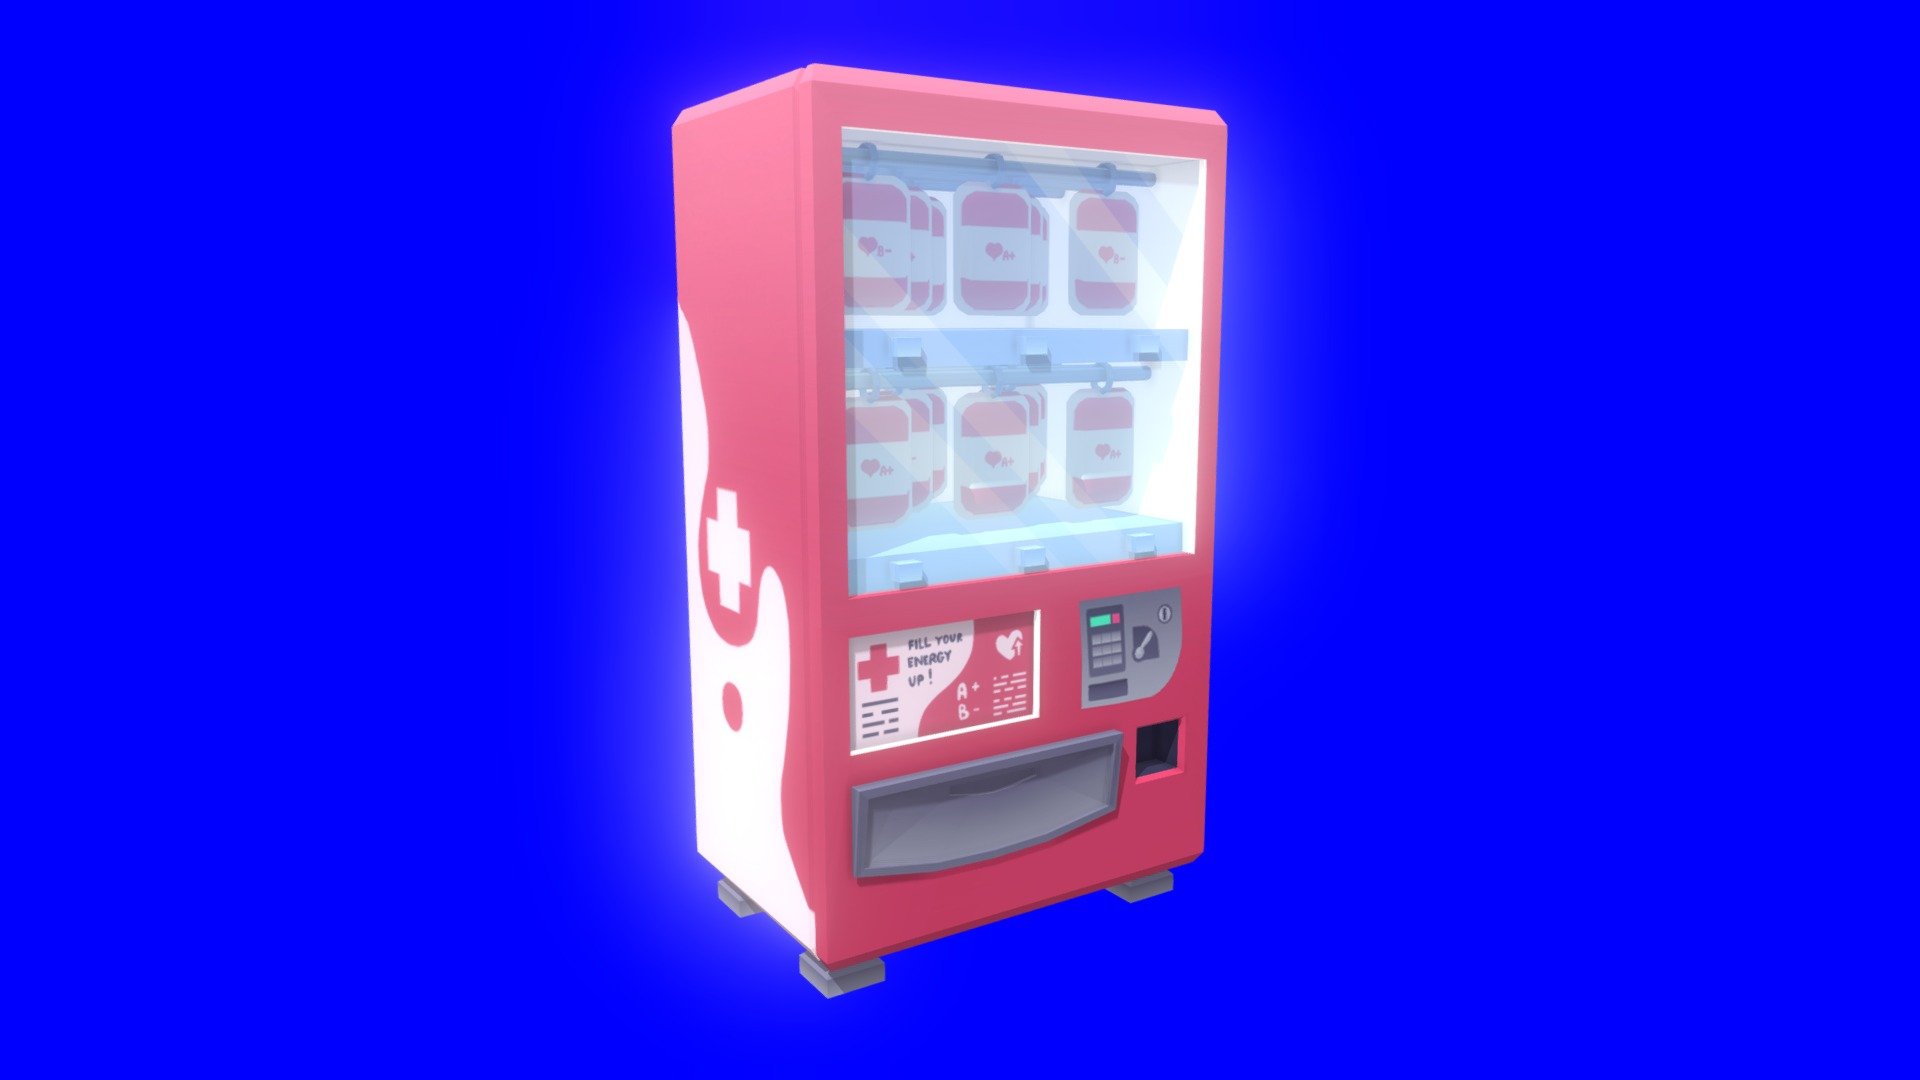 Vending machine, but edgy.
Trying flat color &amp; gradients techniques 3d model